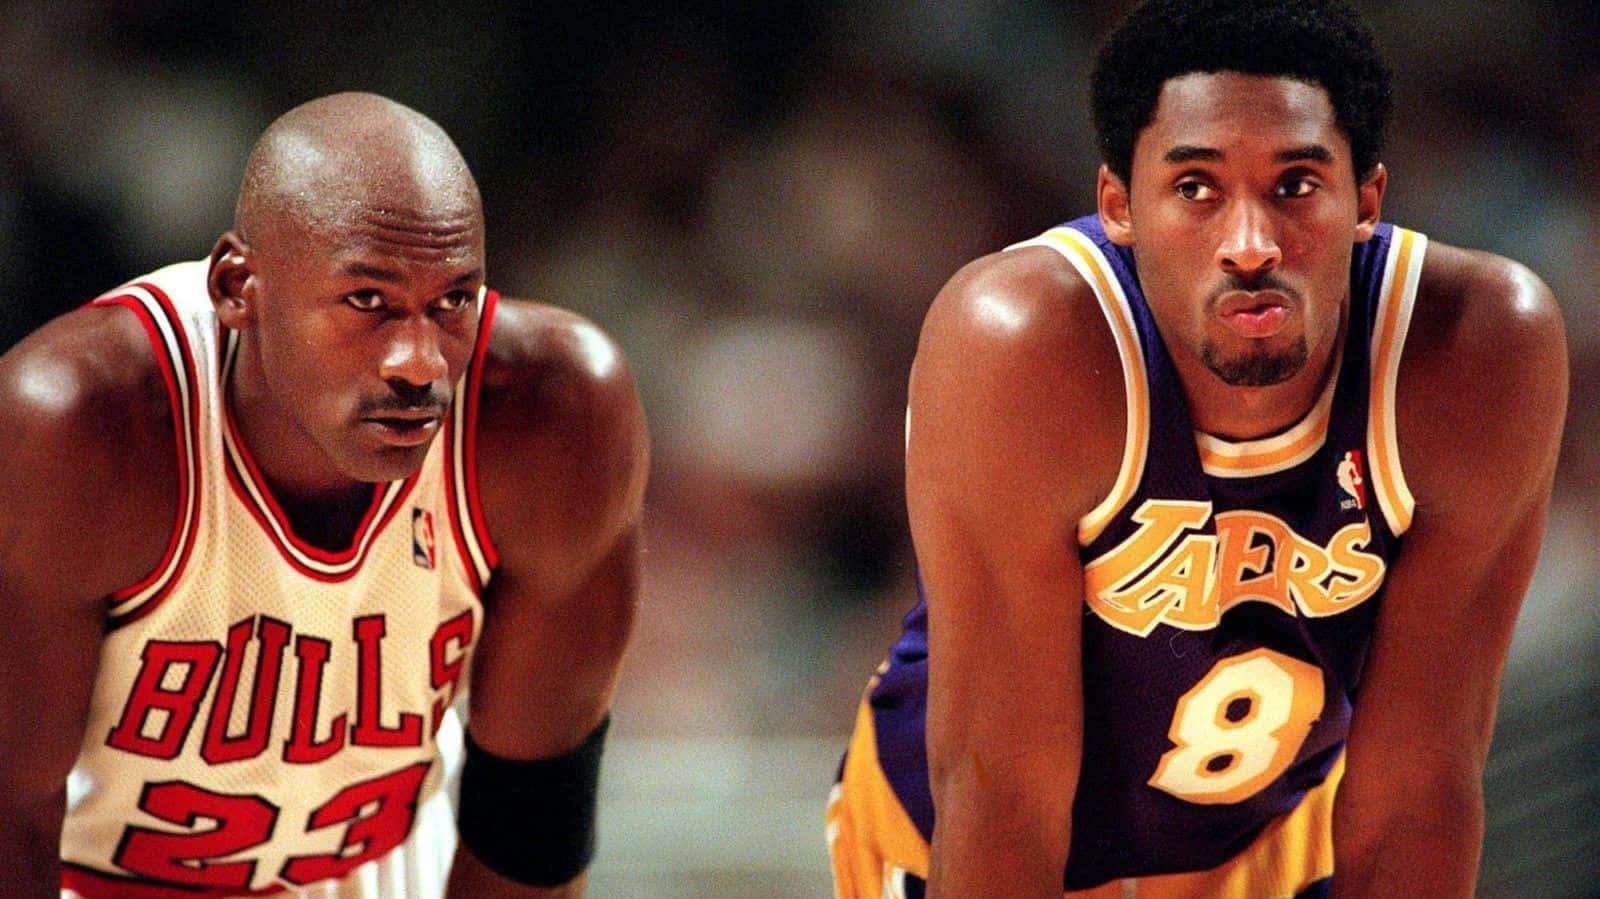 Young Basketball Players Kobe Bryant And Michael Jordan